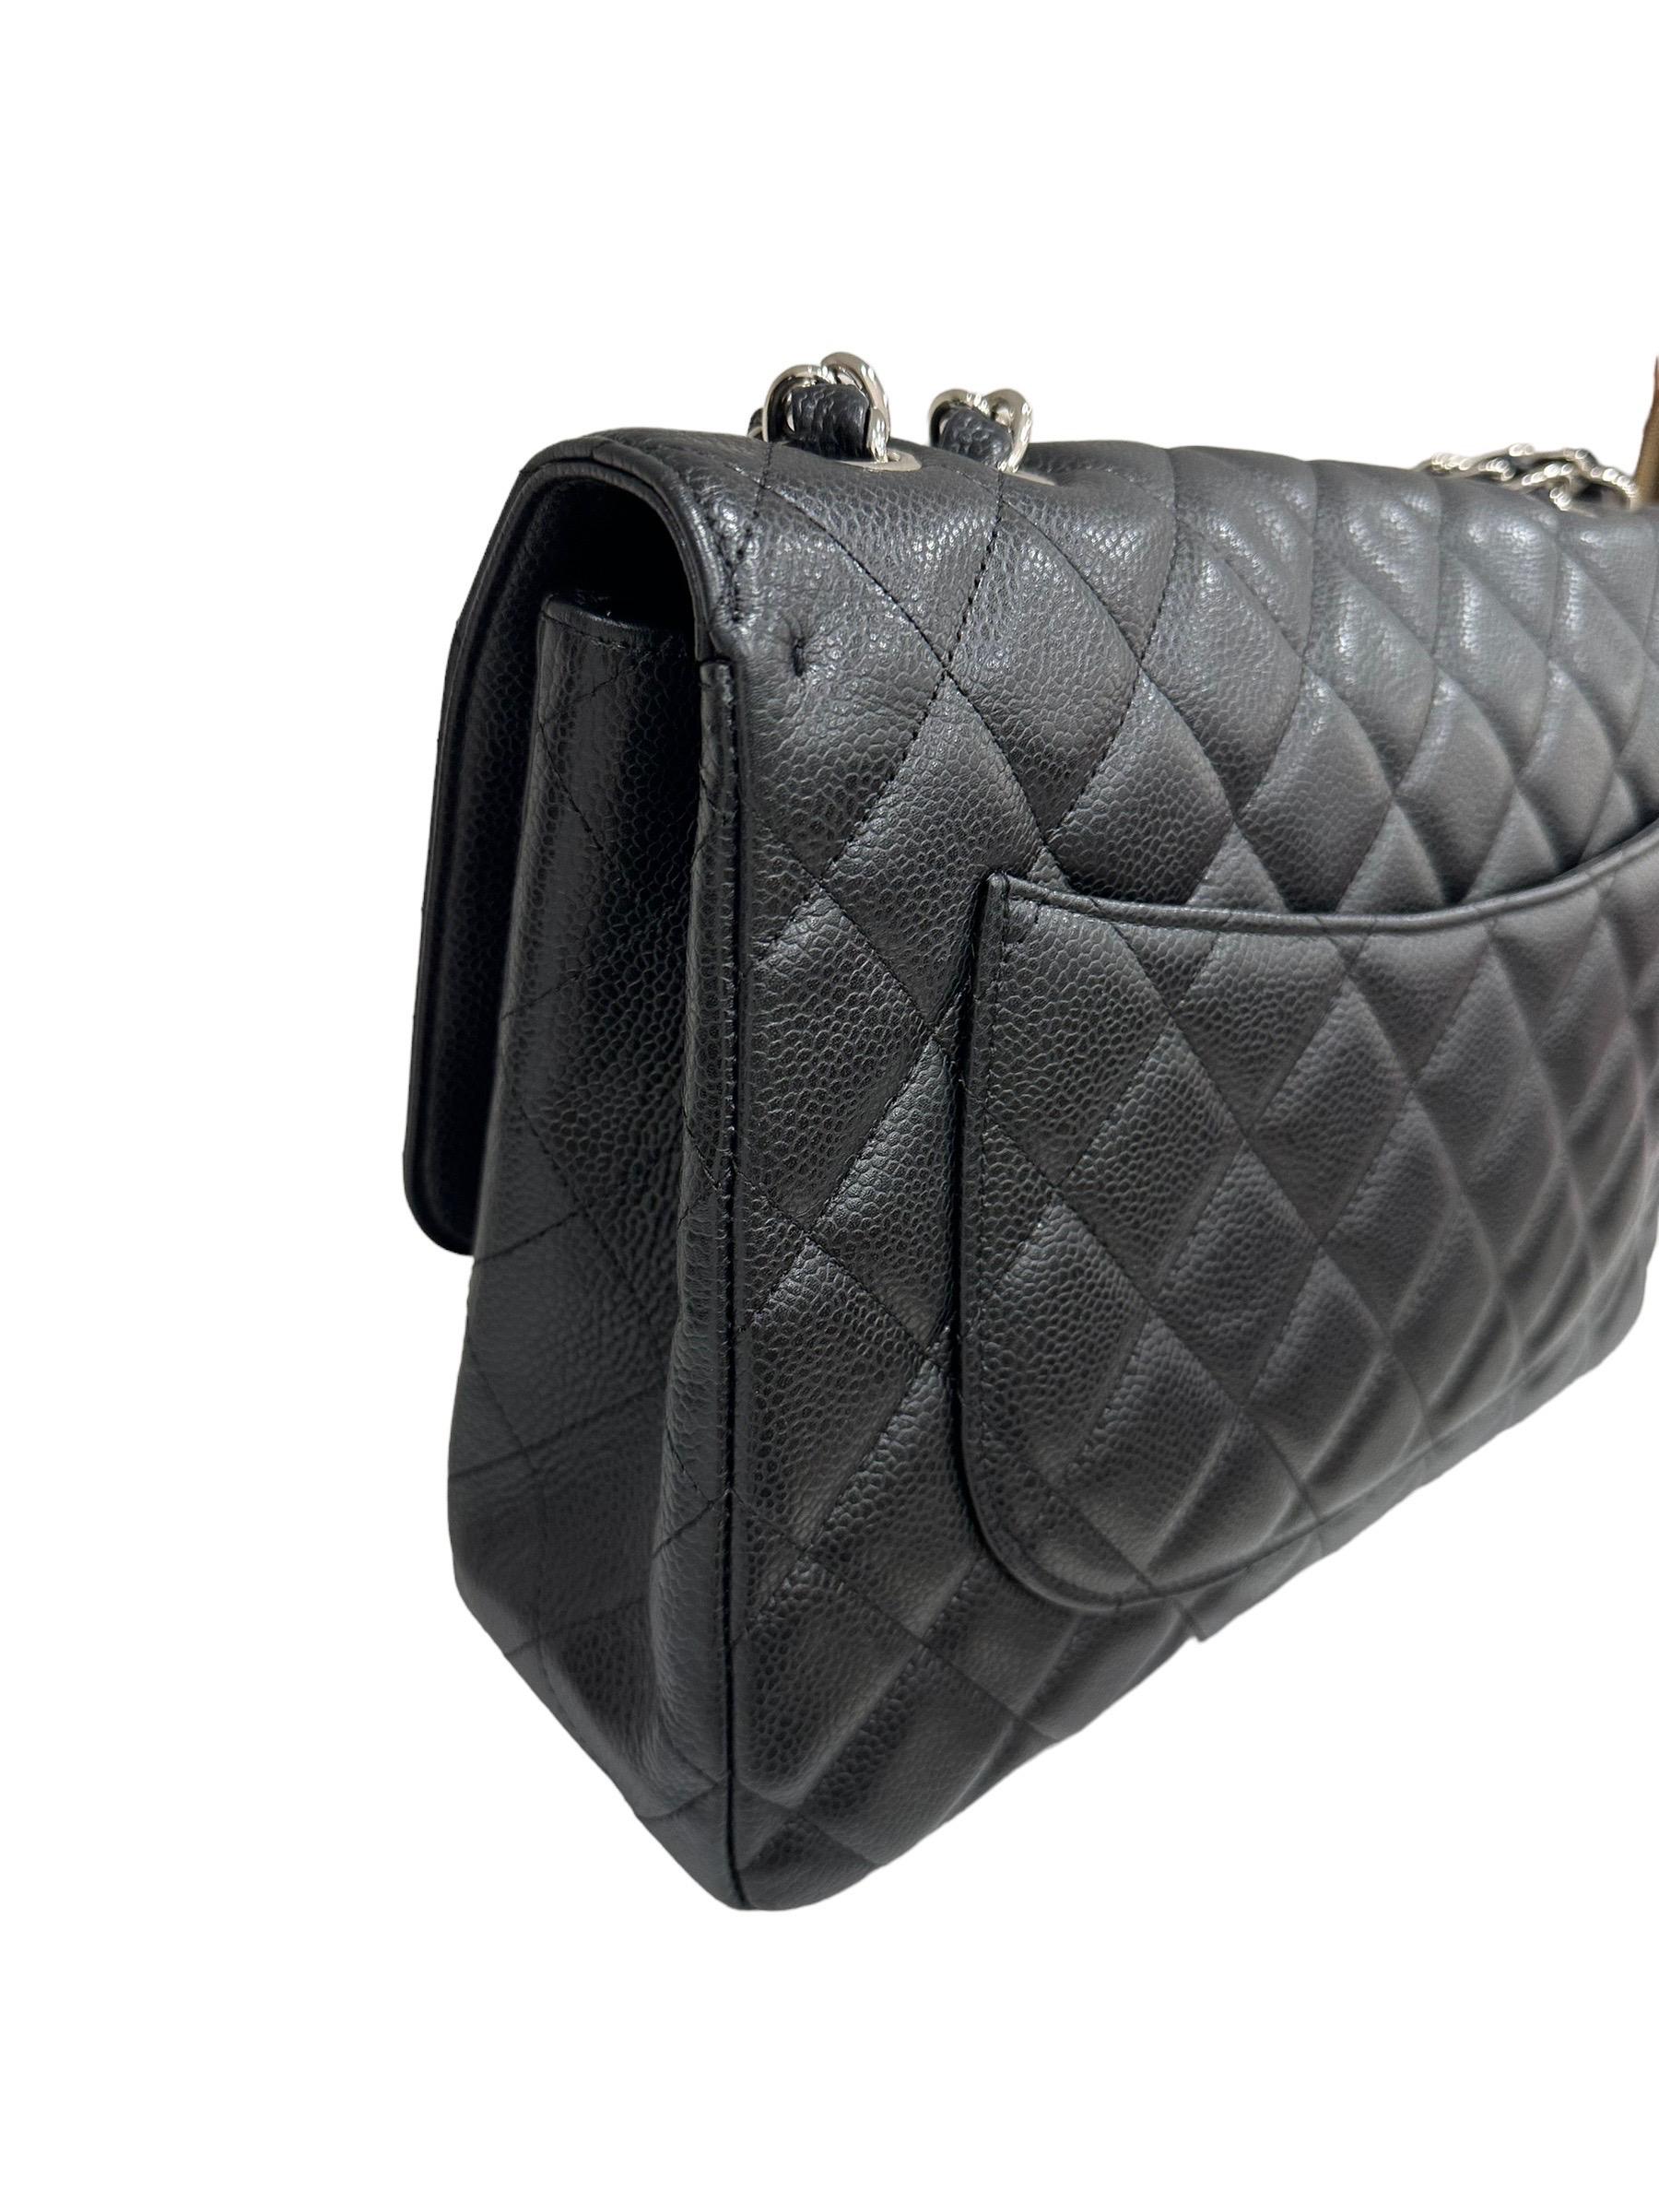 2009 Chanel Jumbo Black Caviar Leather Top Shoulder Bag  For Sale 5